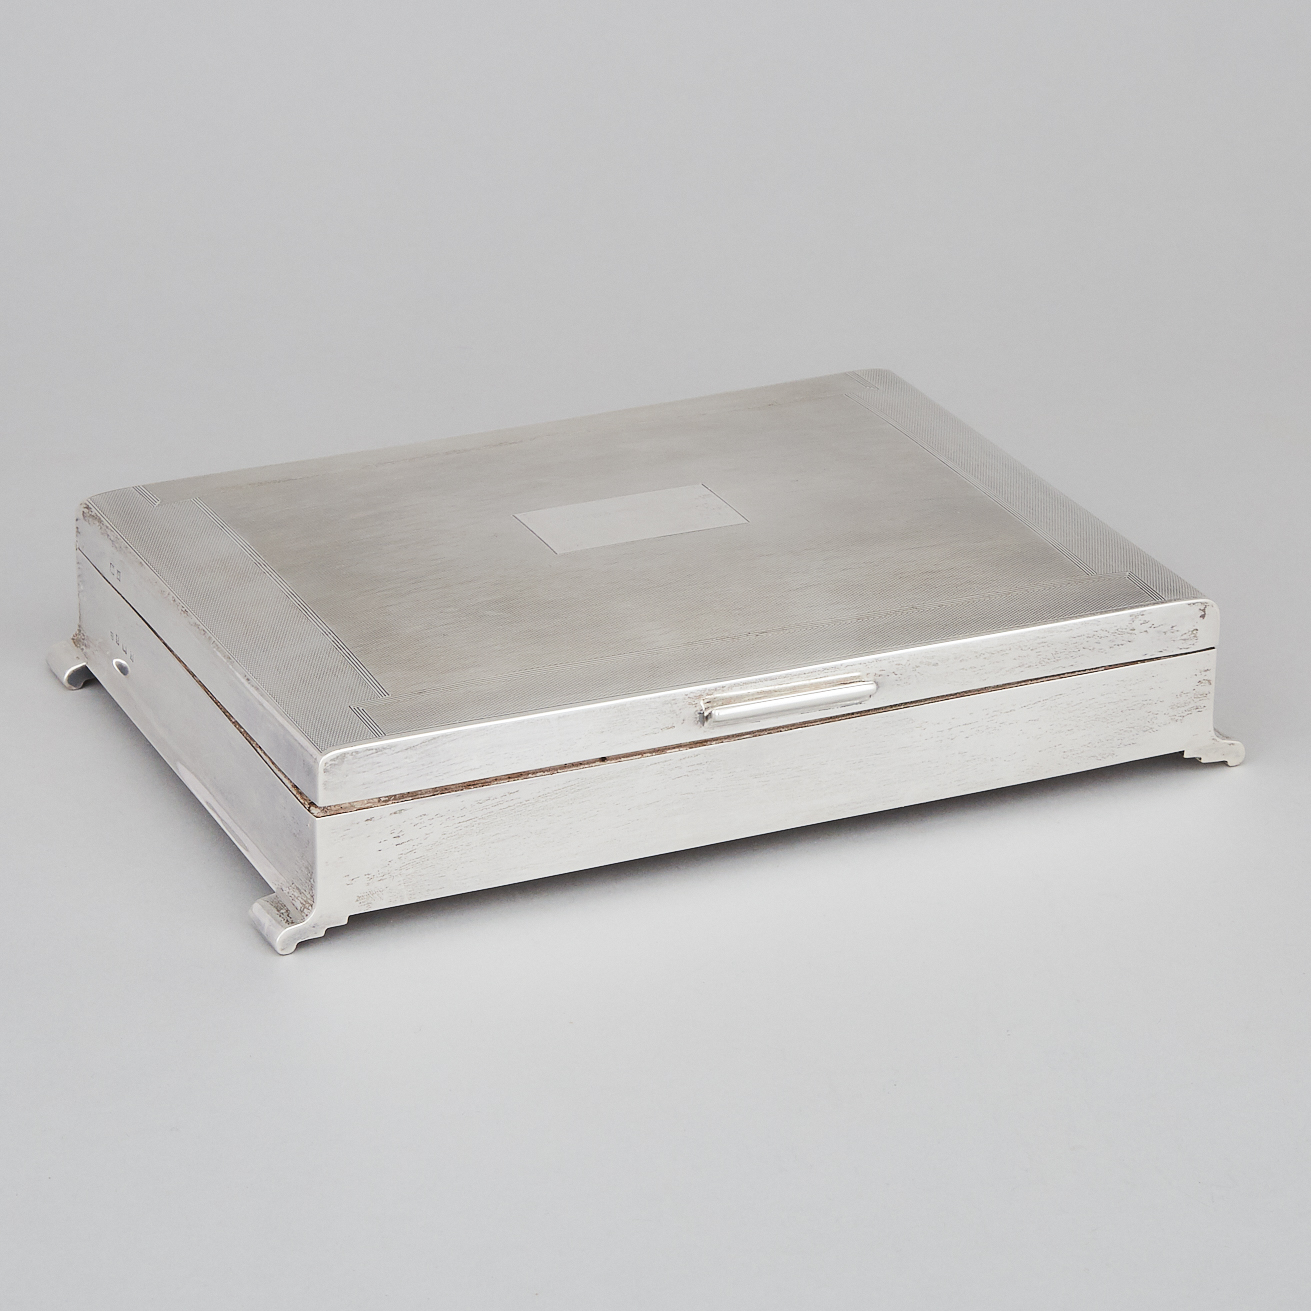 English Silver Rectangular Cigarette Box, Charles S. Green & Co., Birmingham, 1950